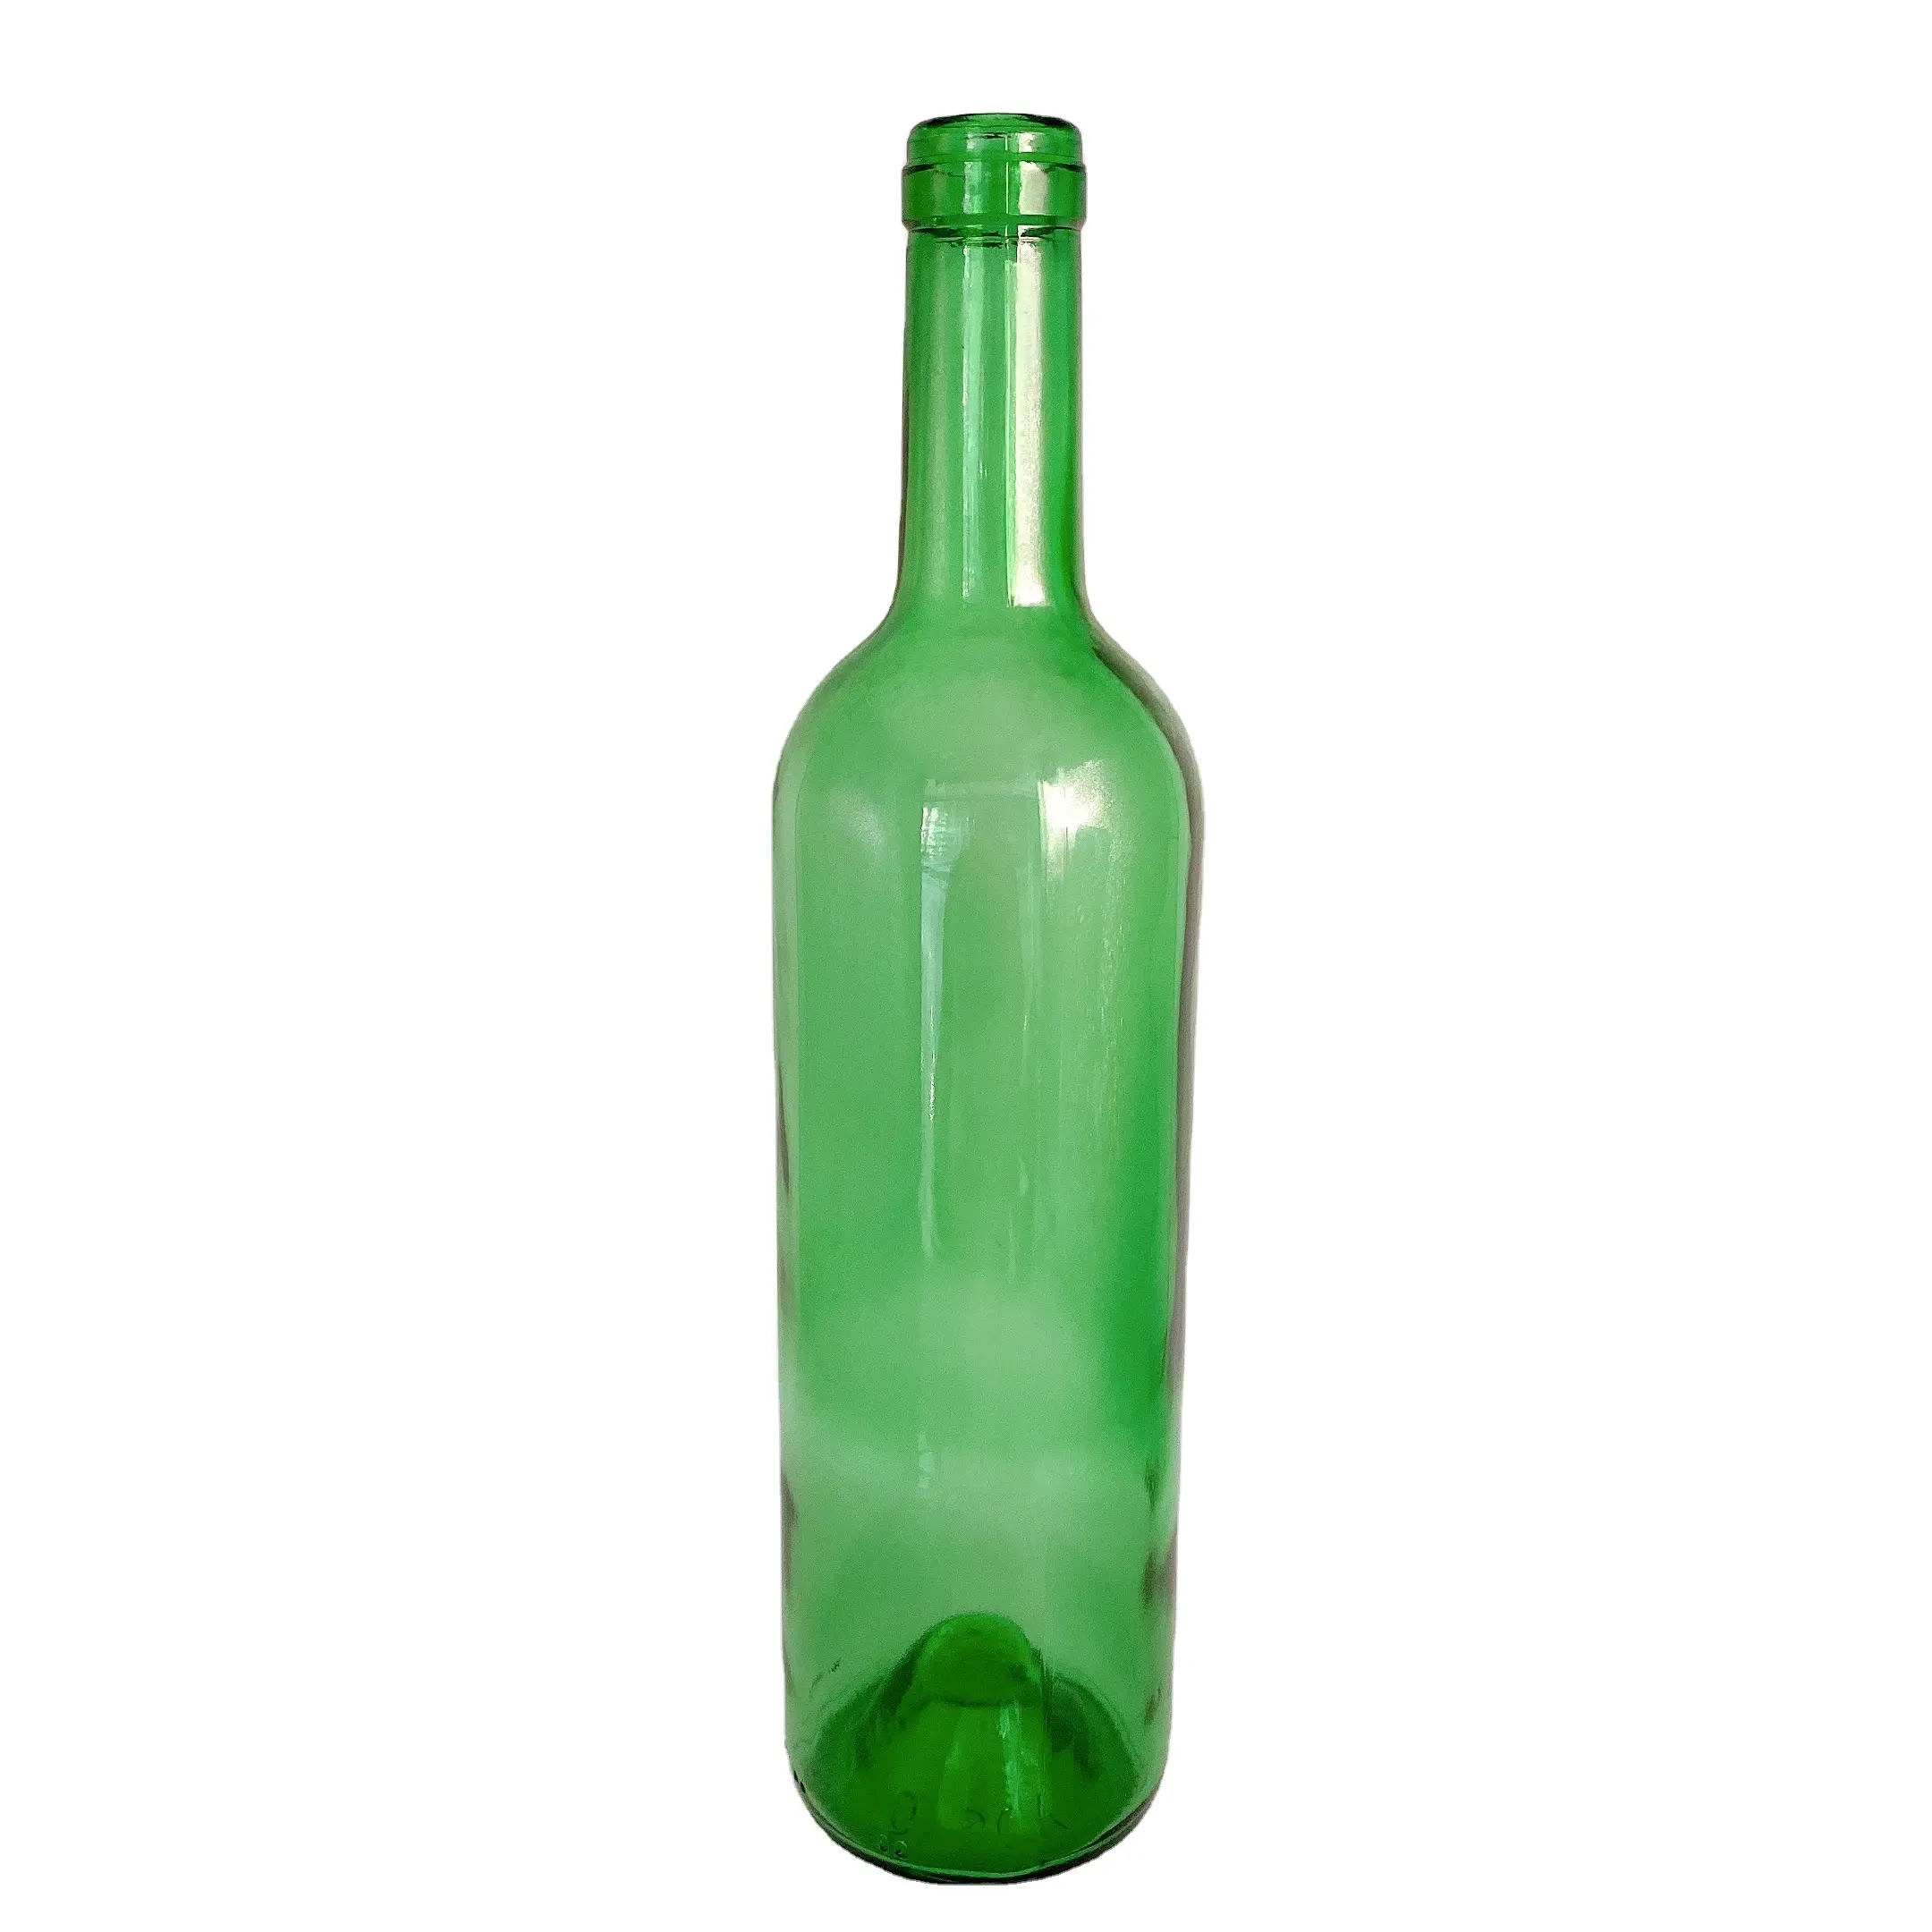 cork top bordeaux wine premium green 3mm glass bottle 750ml